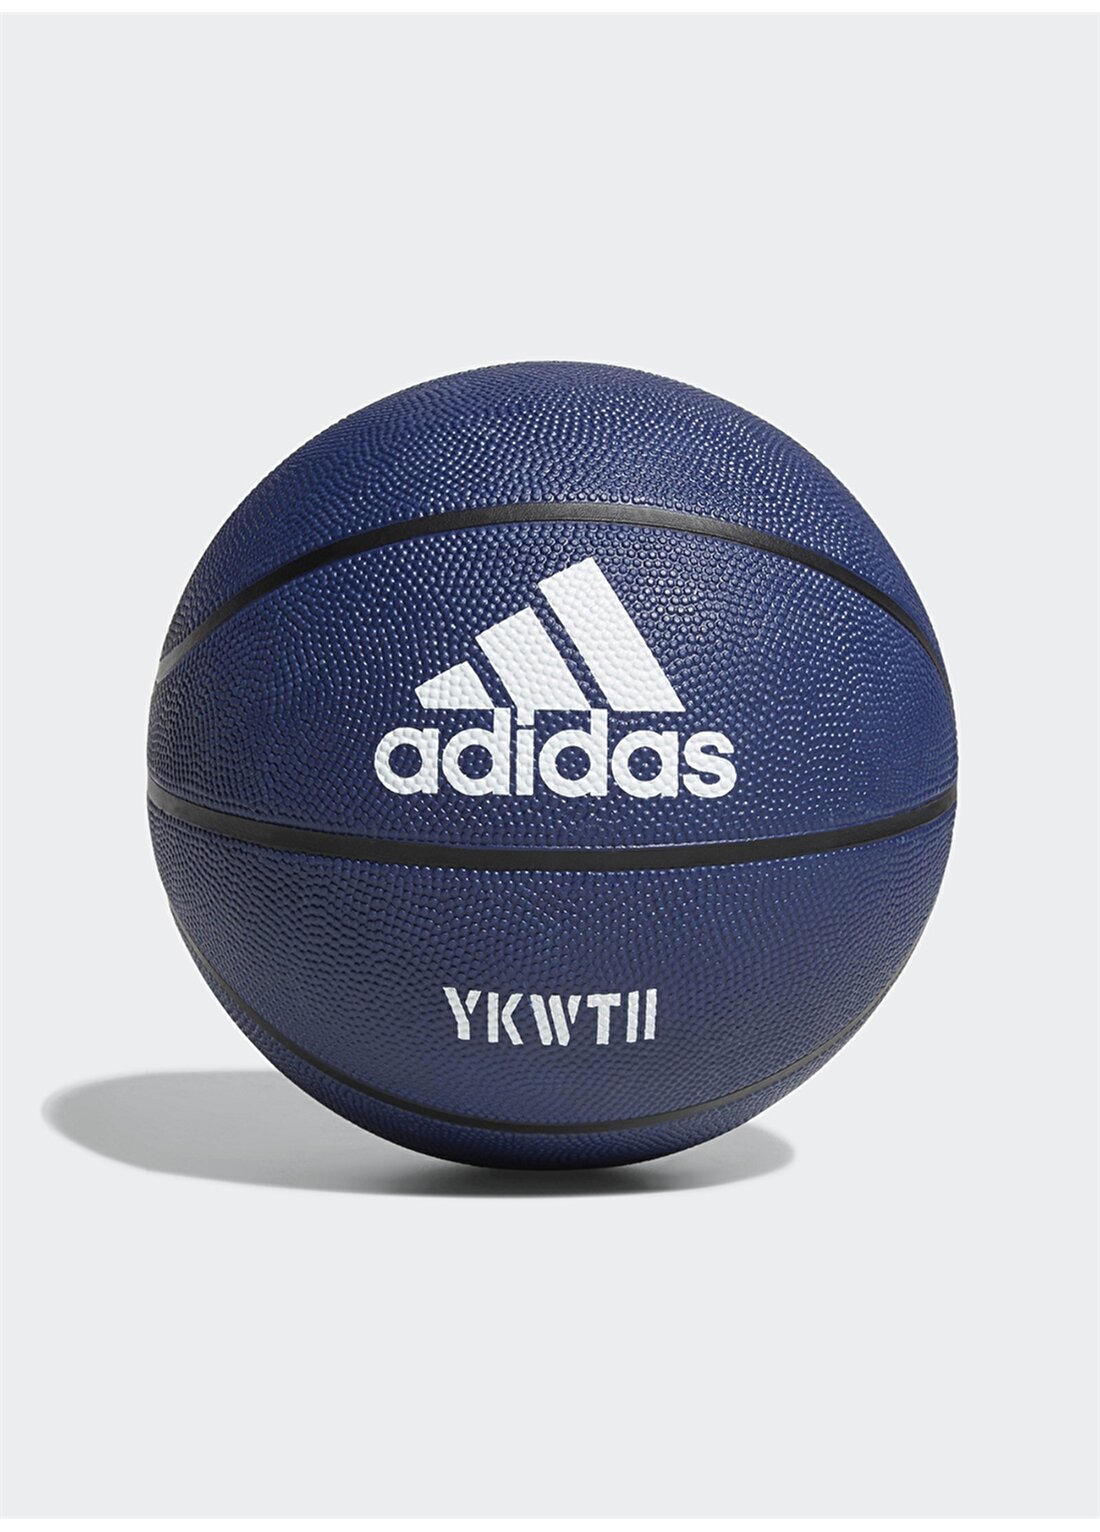 Adidas CW6783 Dame Signature Dame Signature Basketbol Topu